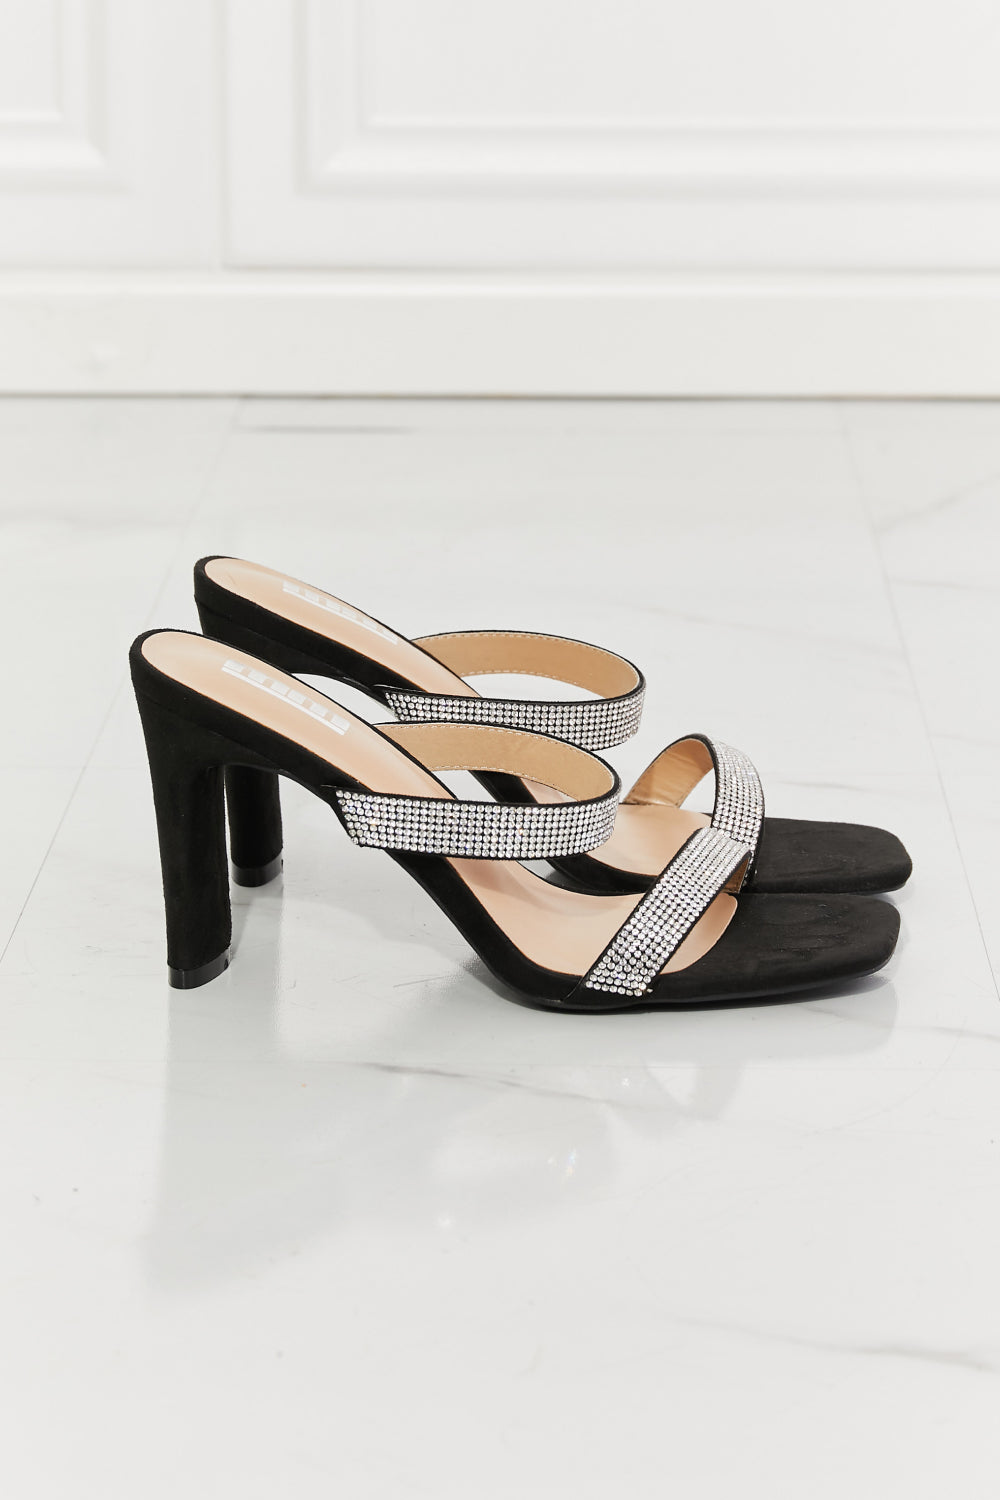 MMShoes Leave A Little Sparkle Rhinestone Block Heel Sandal in Black - BEAUTY COSMOTICS SHOP